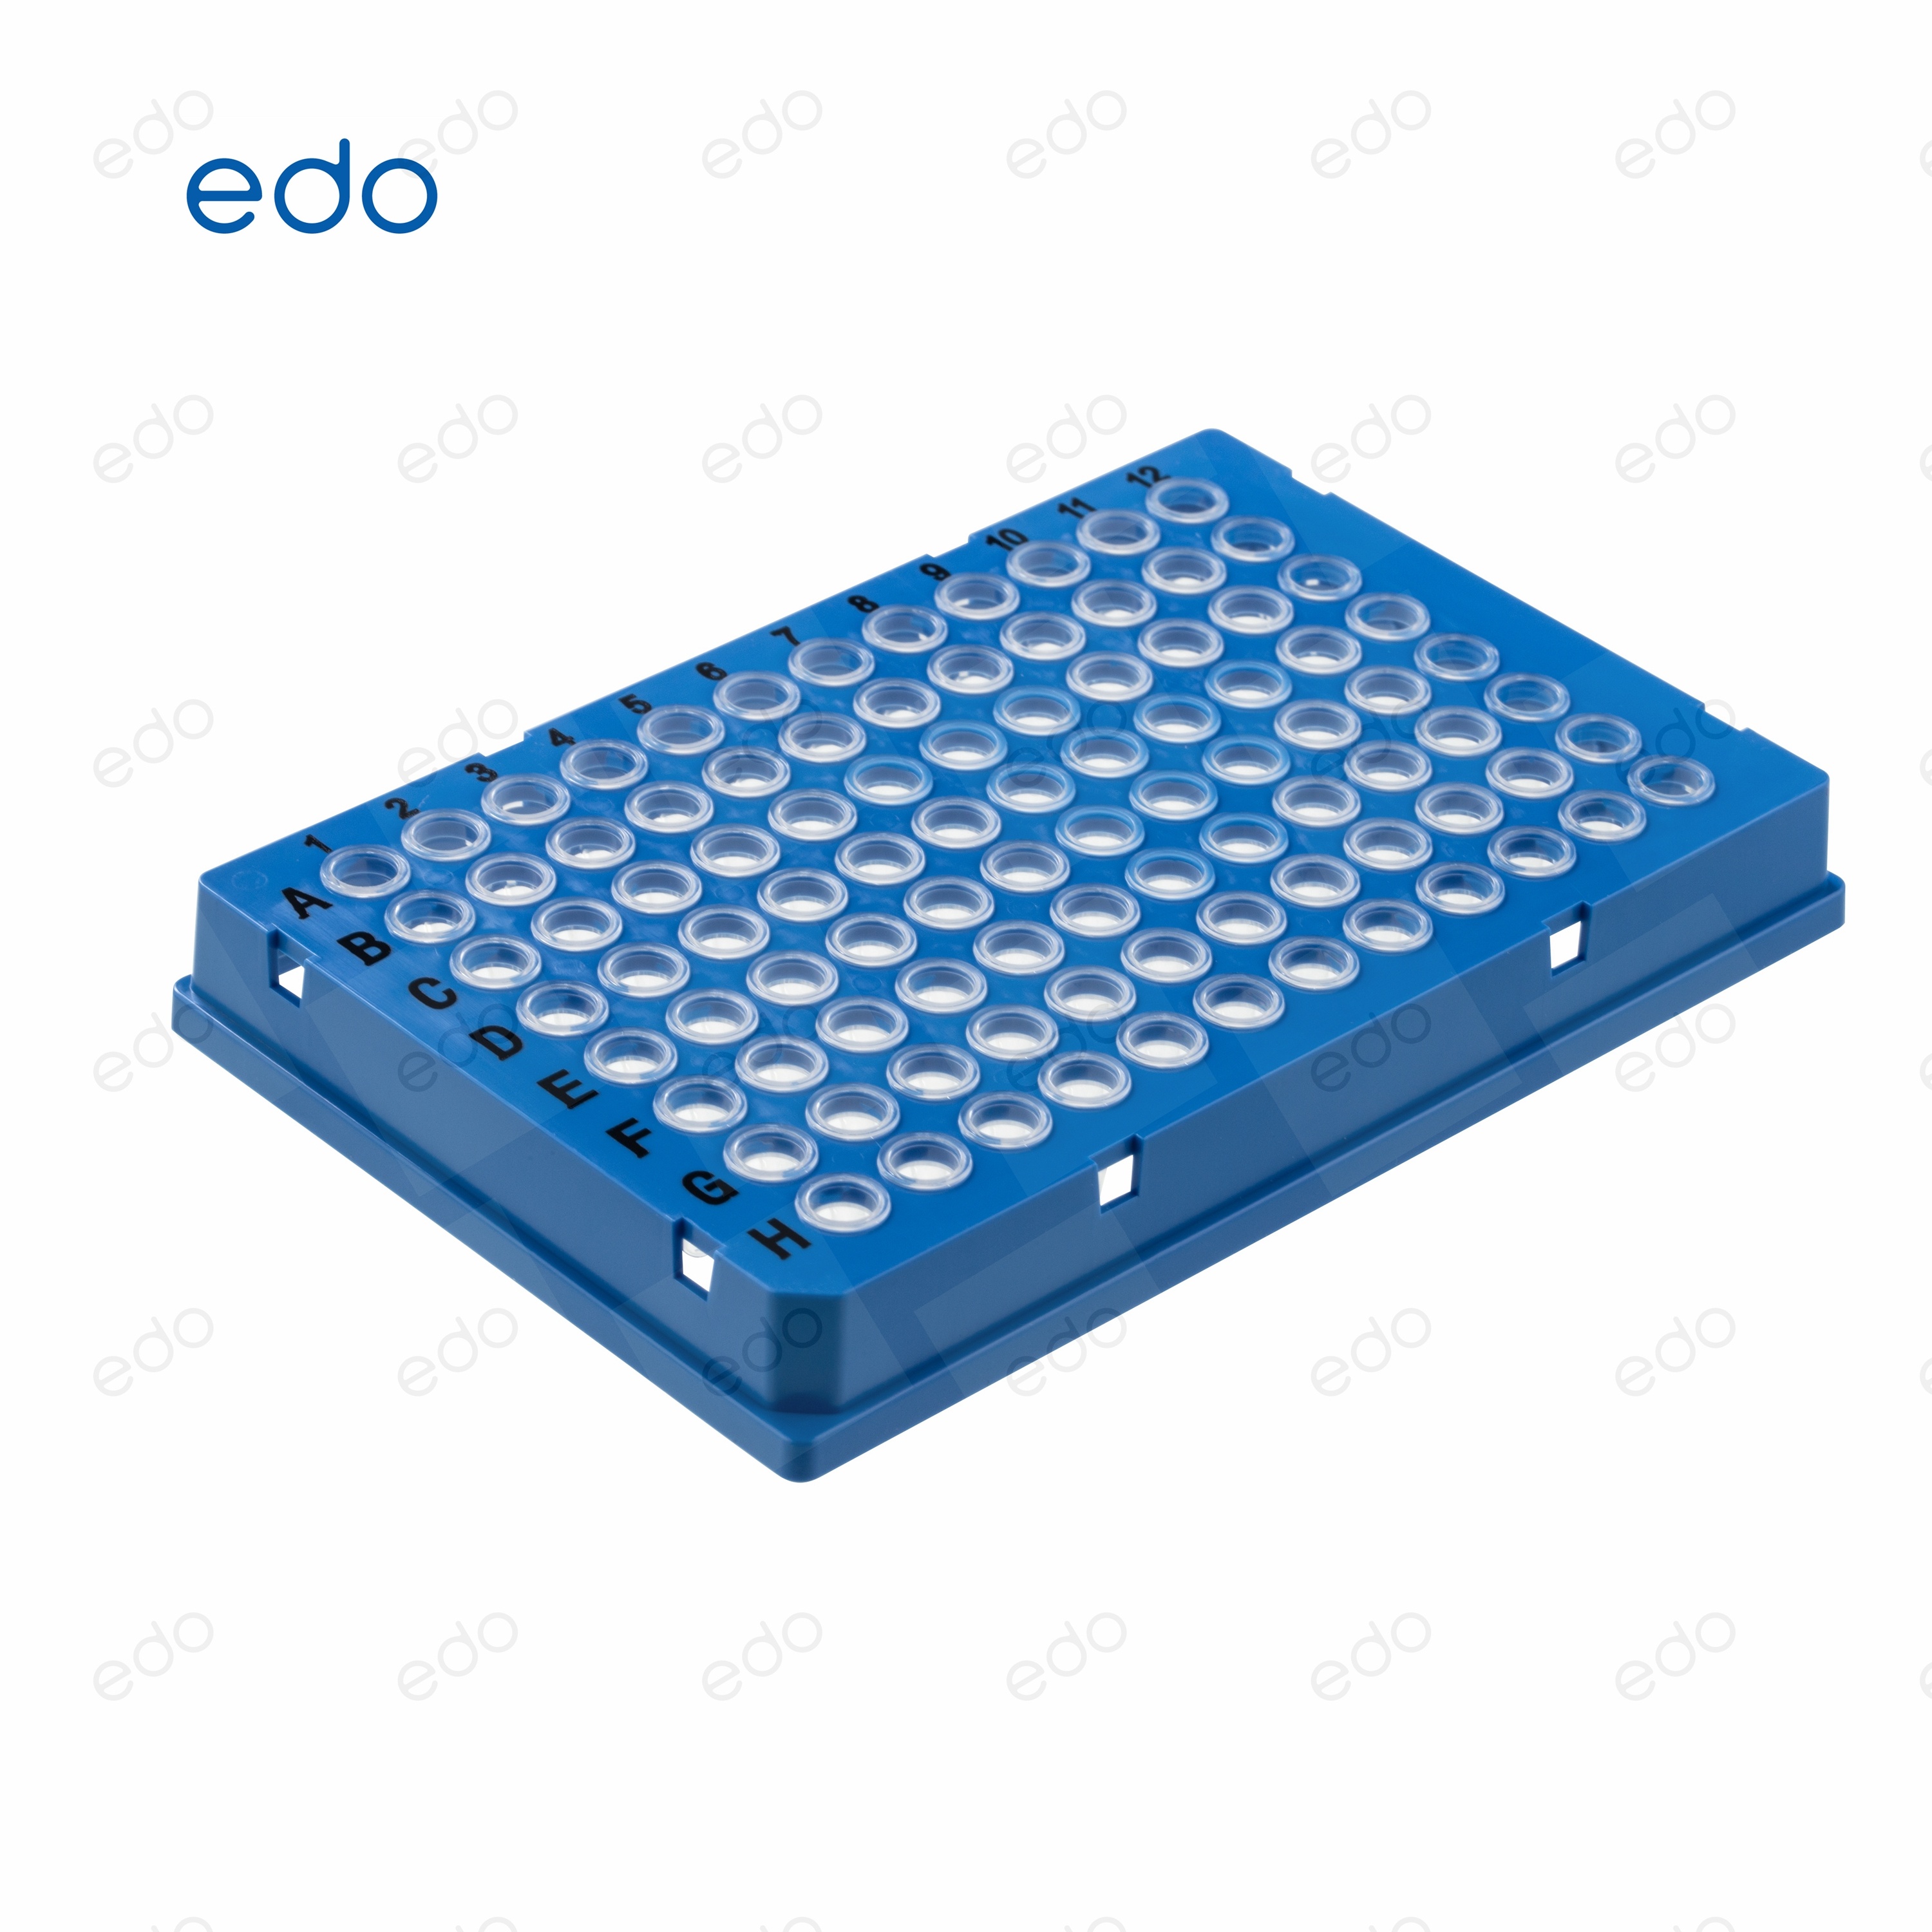 edo 0.1mL 96孔PCR板-全群边，透明，蓝色框 150ulpcr板 核酸提取检测 不可拆